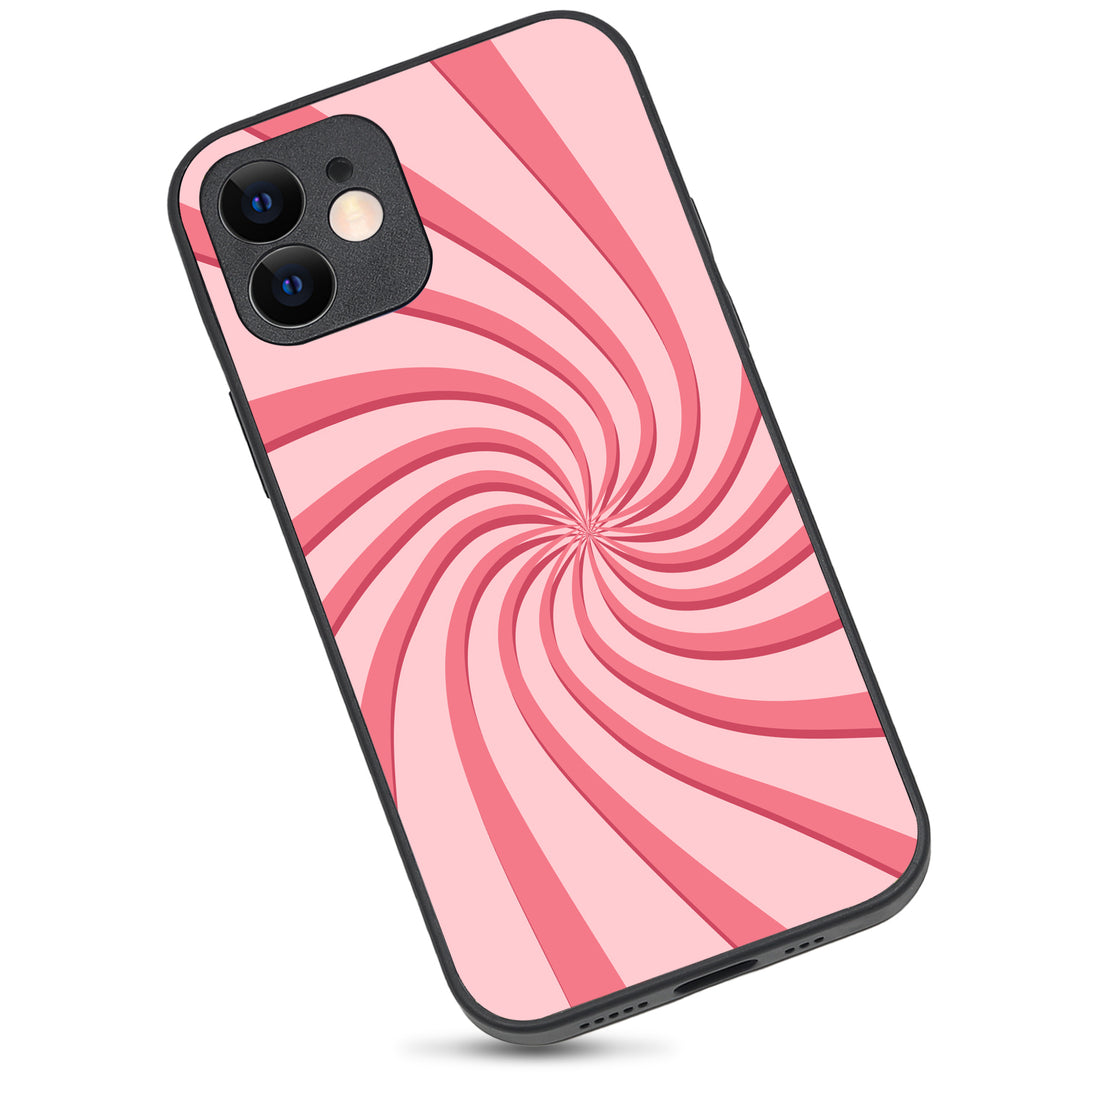 Spiral Optical Illusion iPhone 12 Case